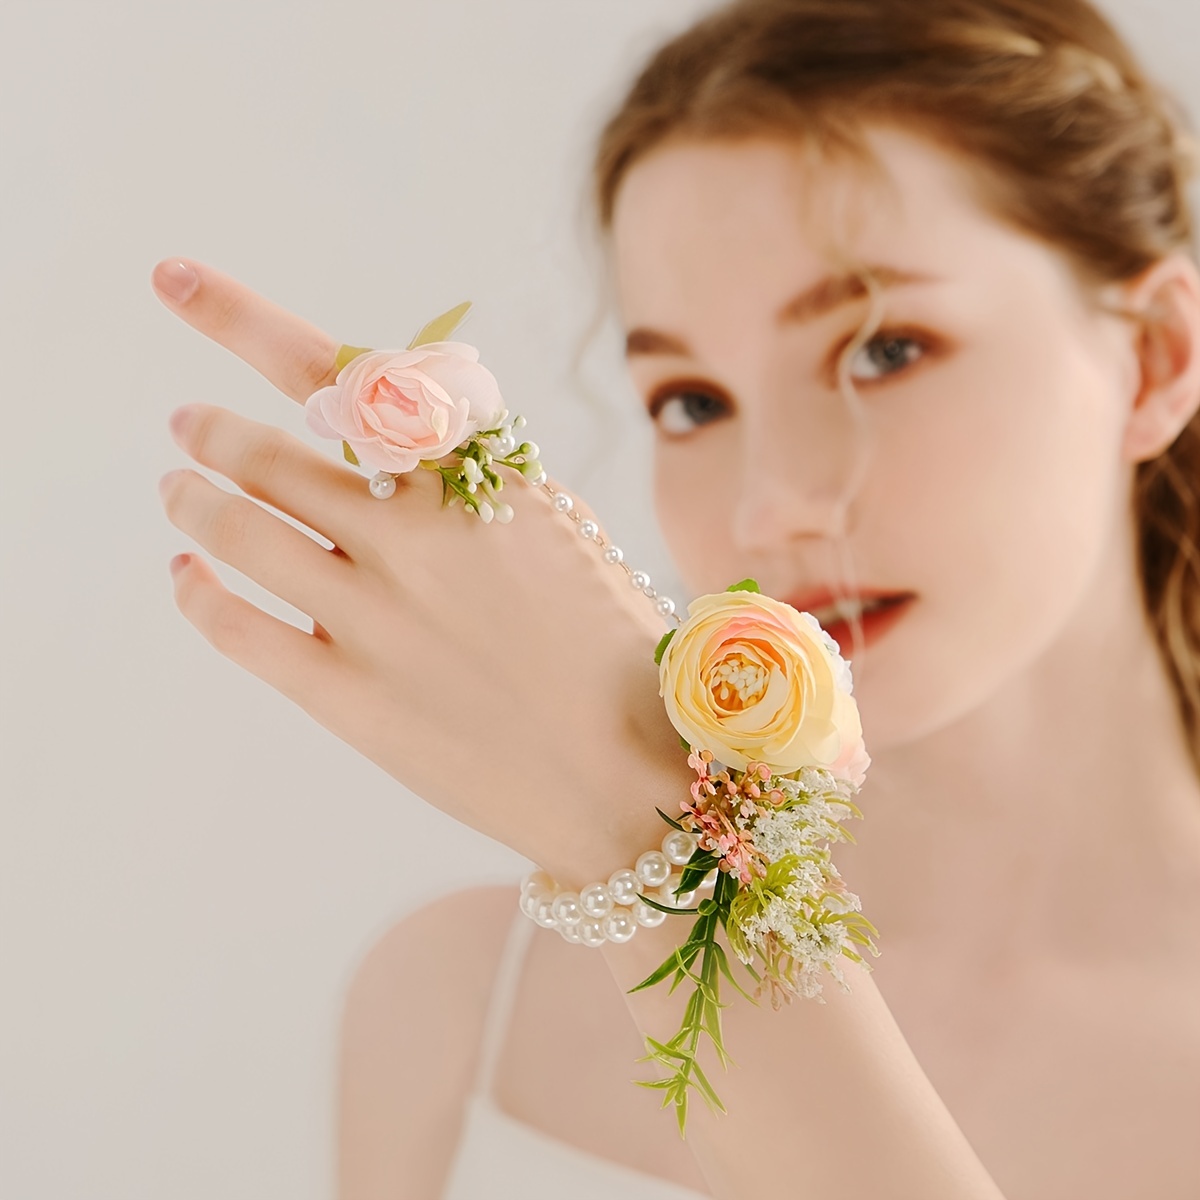 Casdre Bridal Wrist Corsage Pearl Bride Wedding Hand Flower Corsage Wristlet Wedding Accessories for Women and Girls (White)